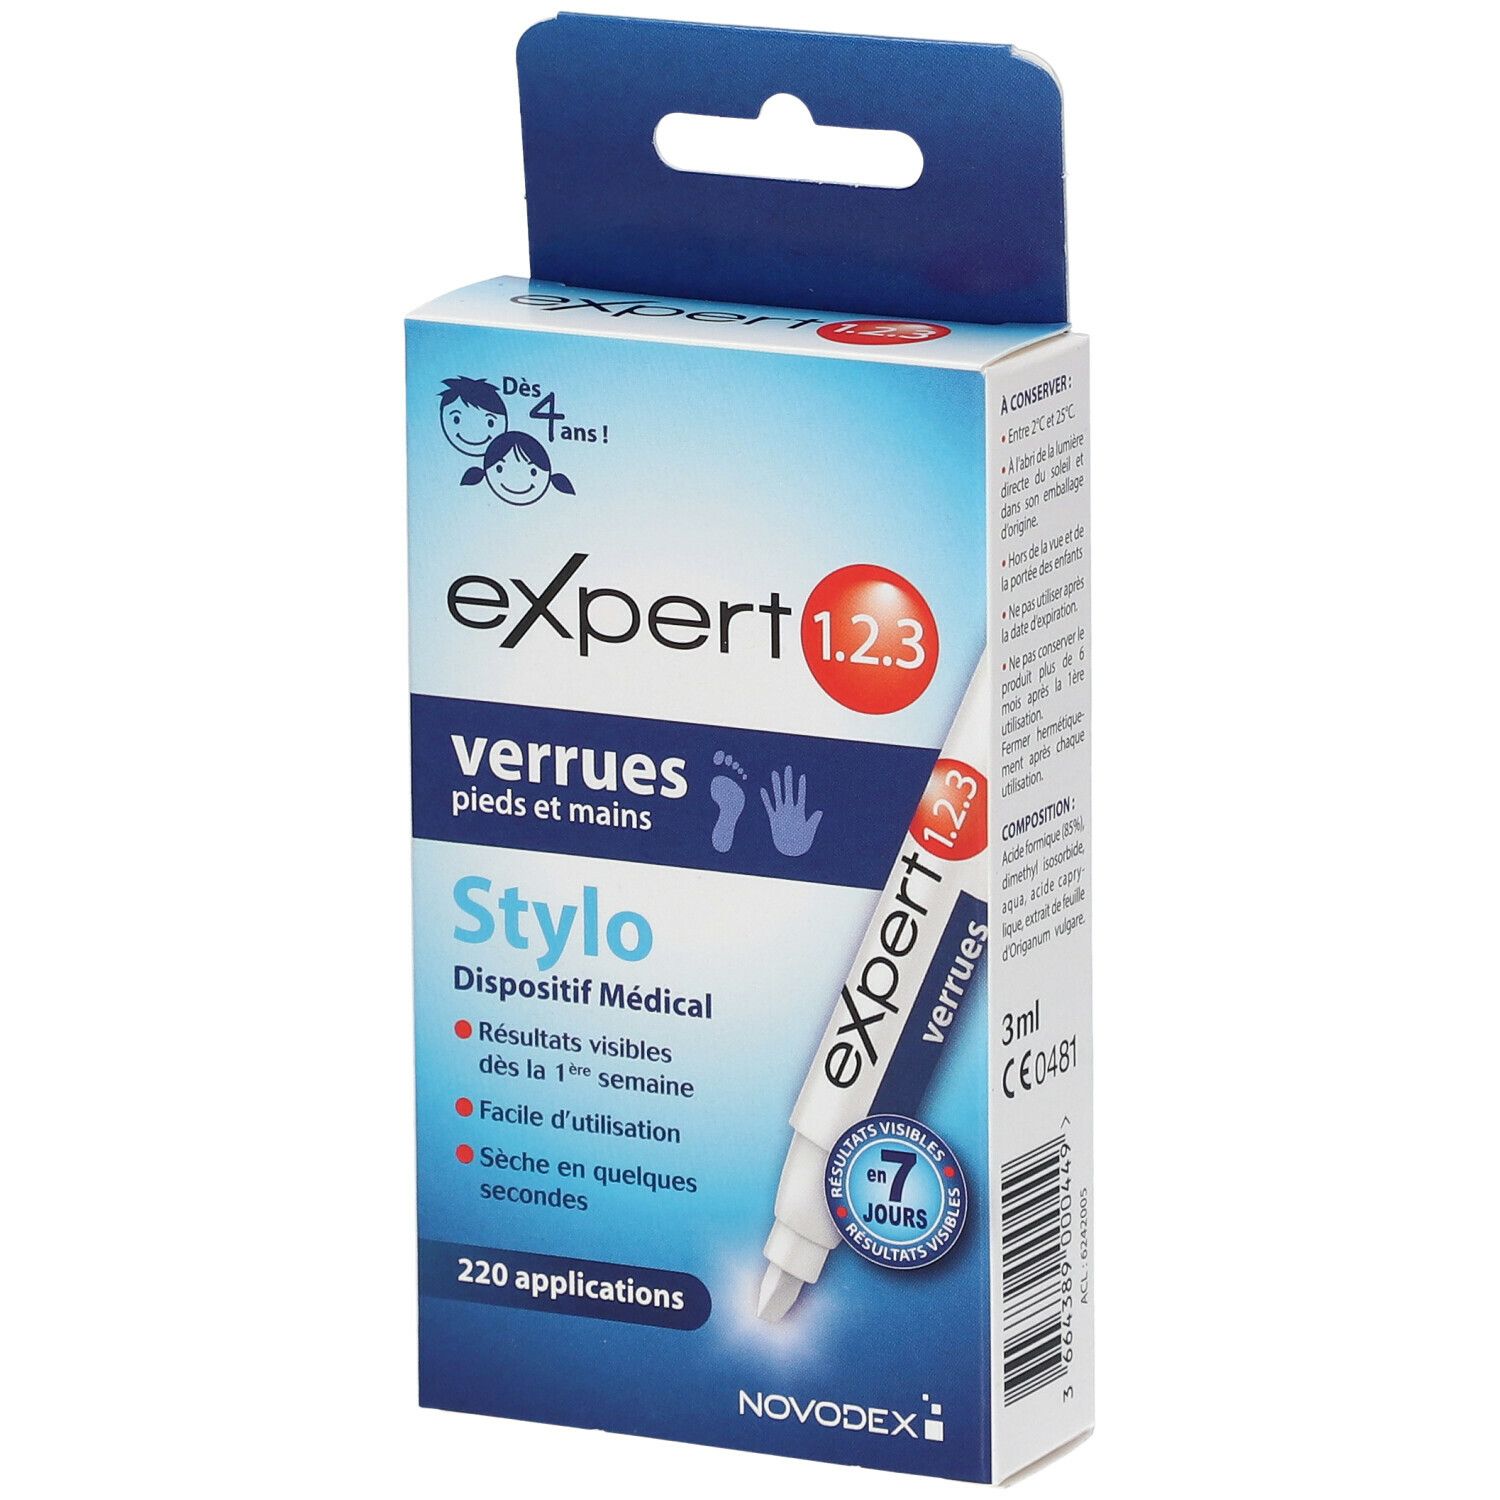 Novodex Expert 1.2.3 verrues Stylo